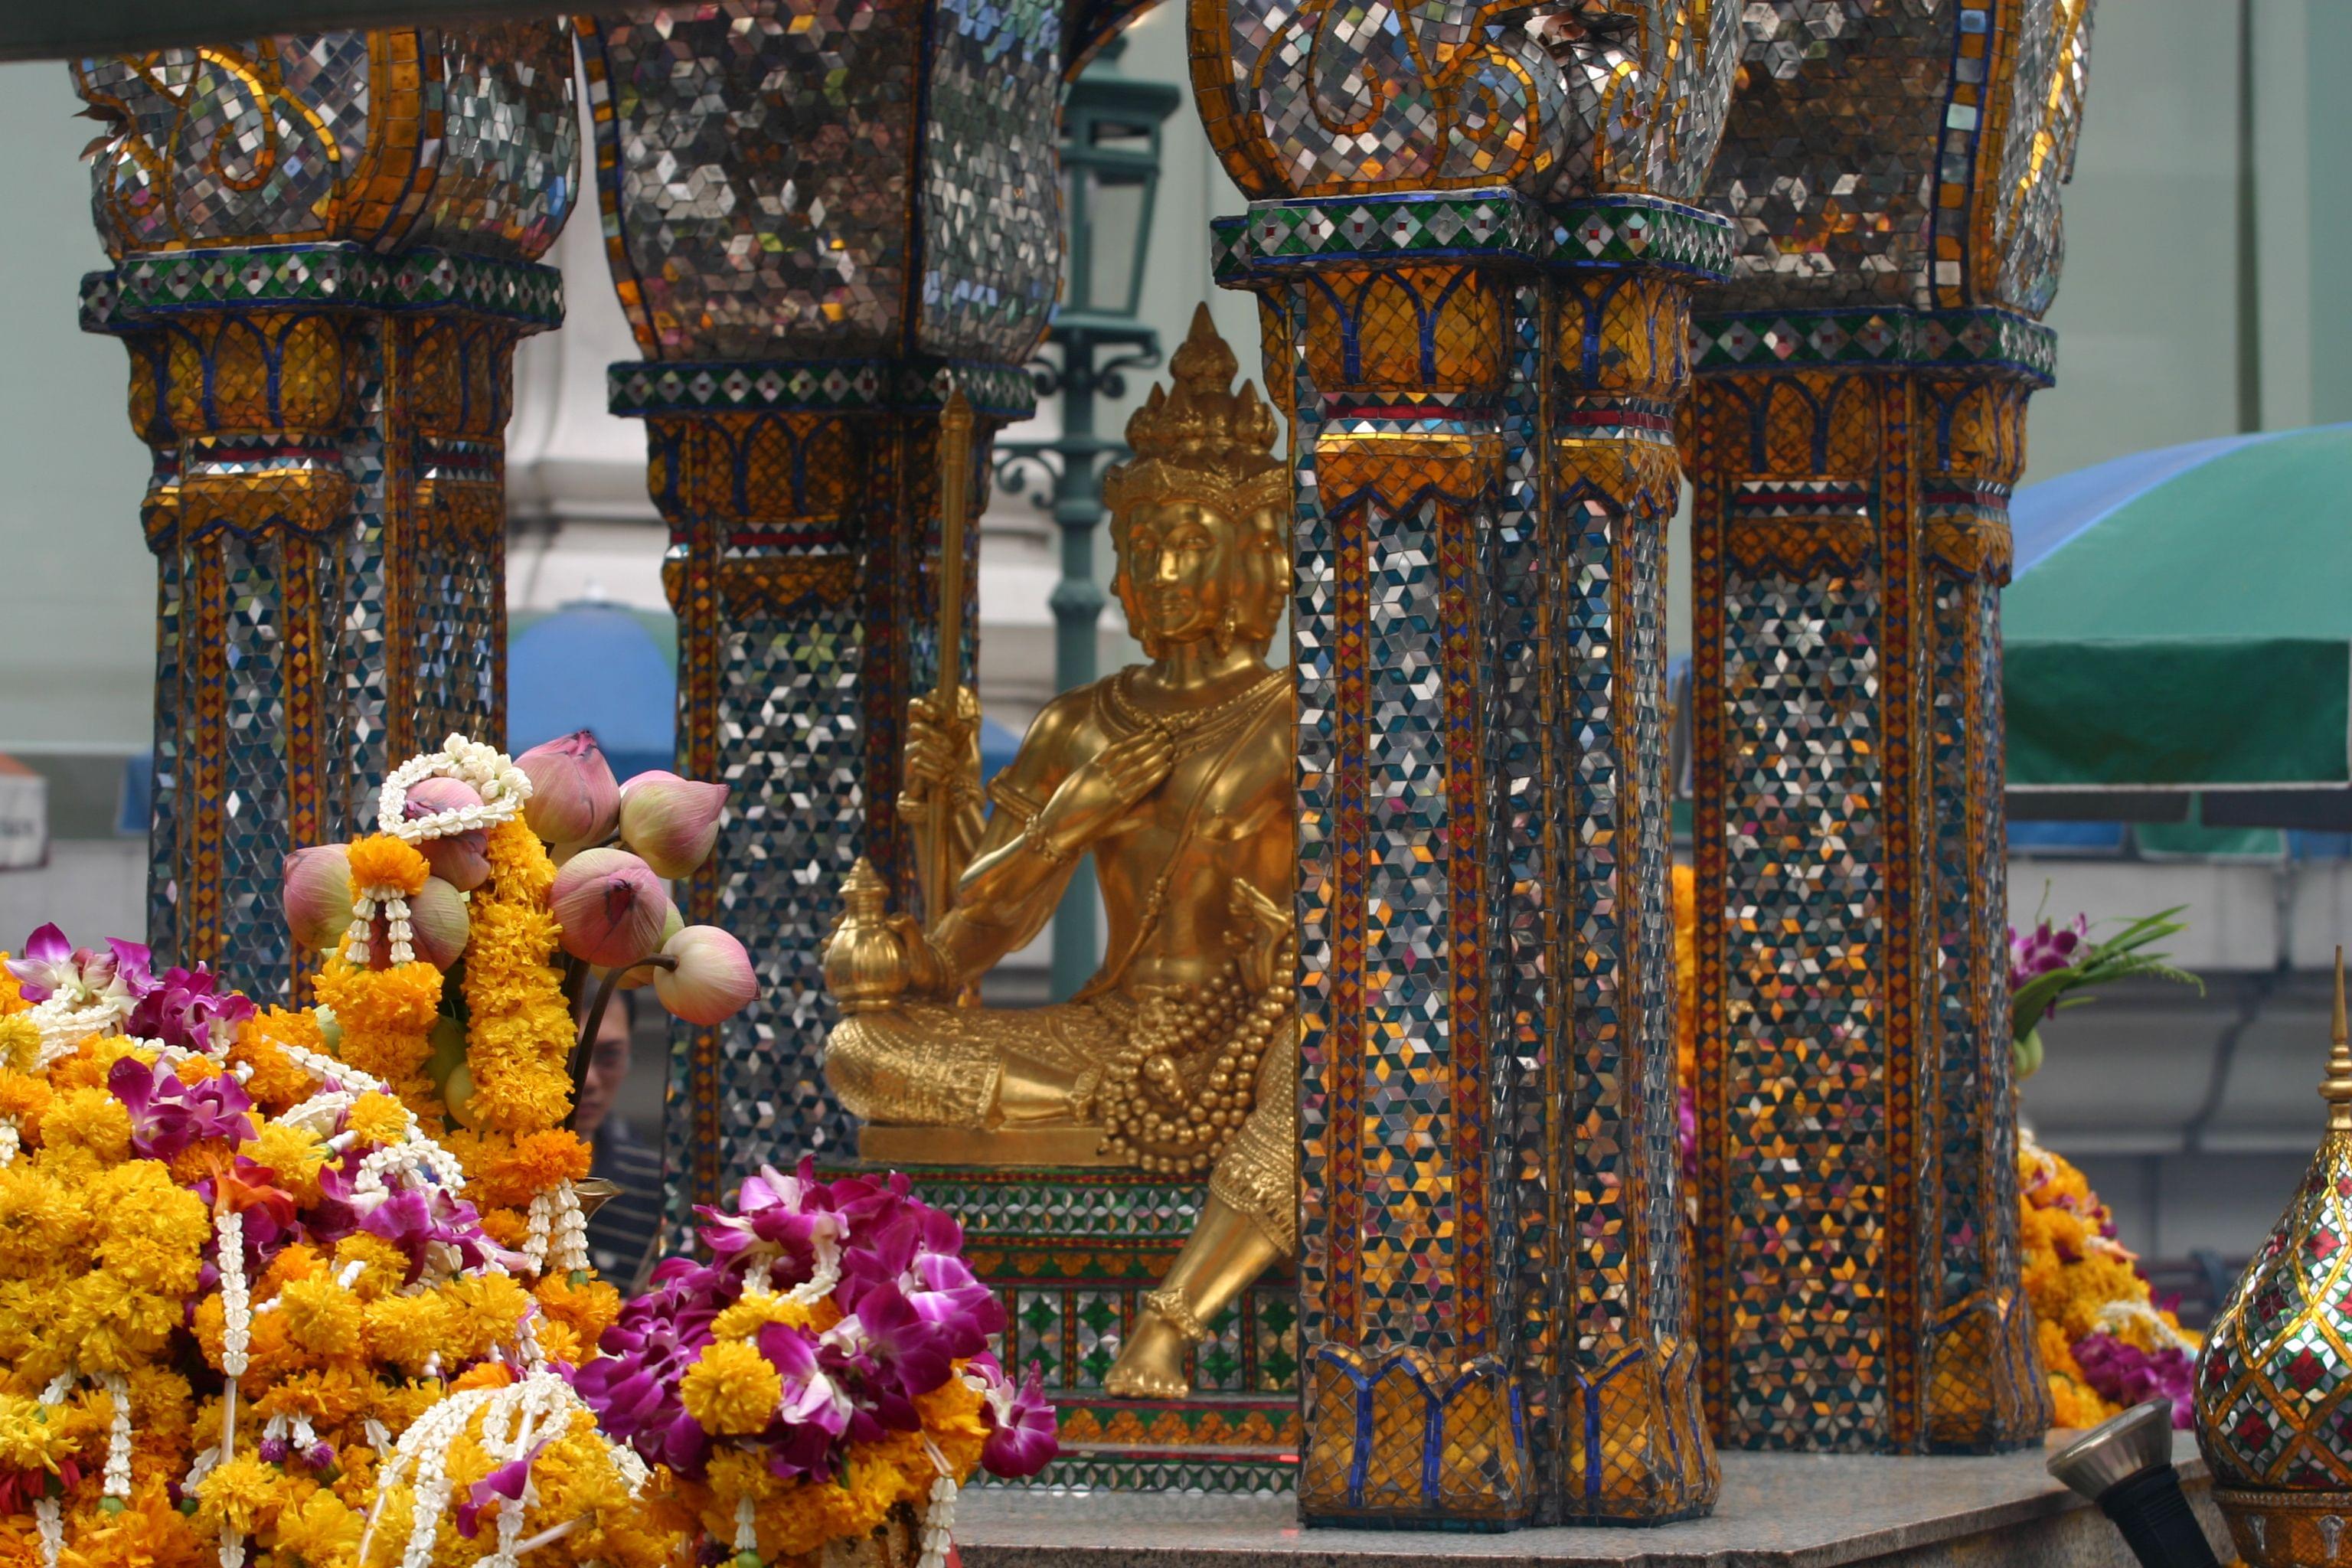 The Erawan Shrine